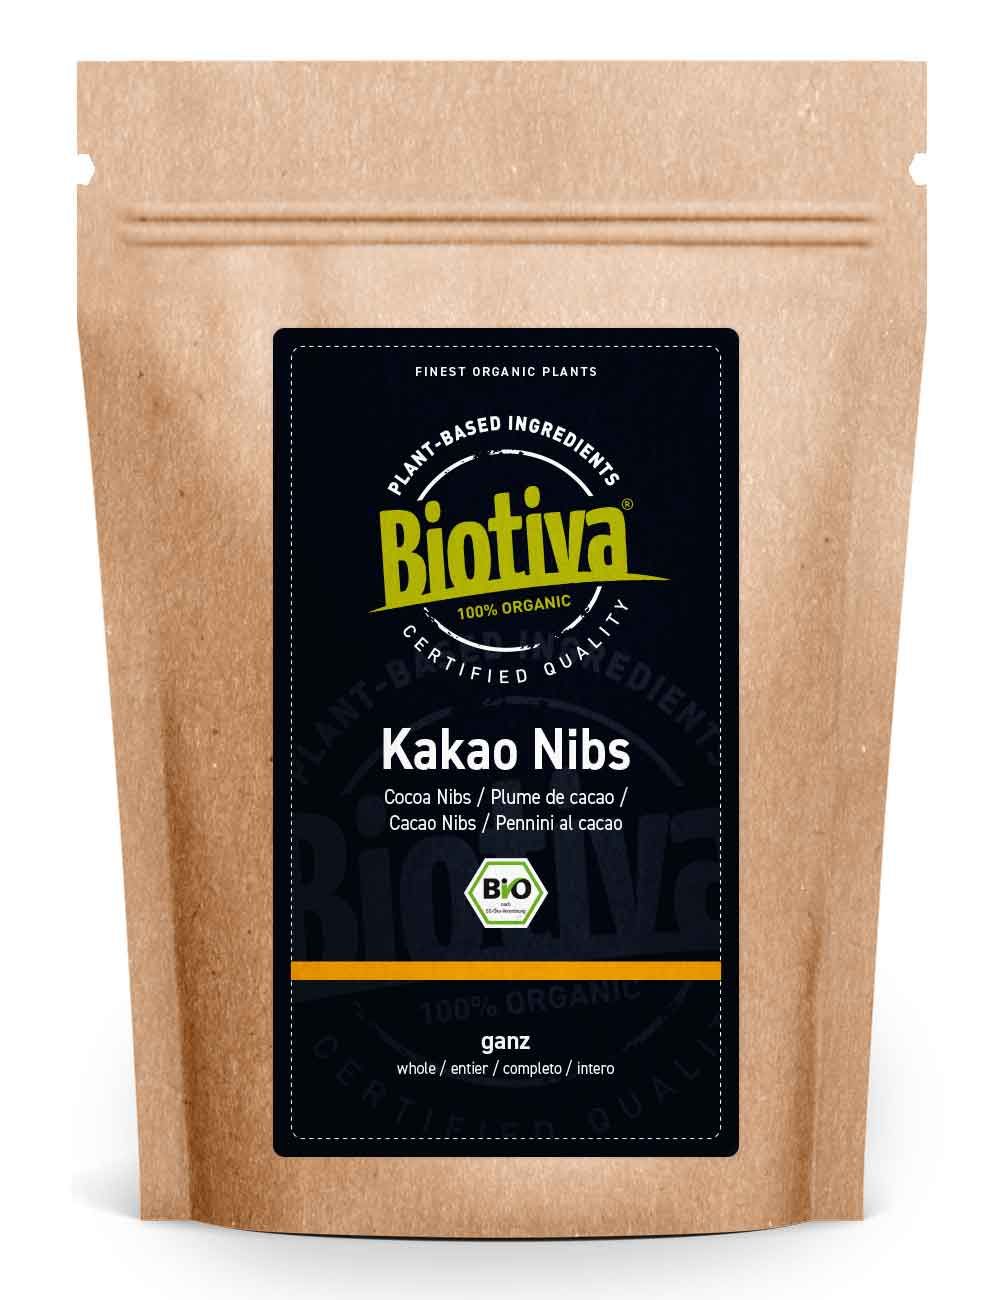 Biotiva Kakao Nibs ungeröstet Bio